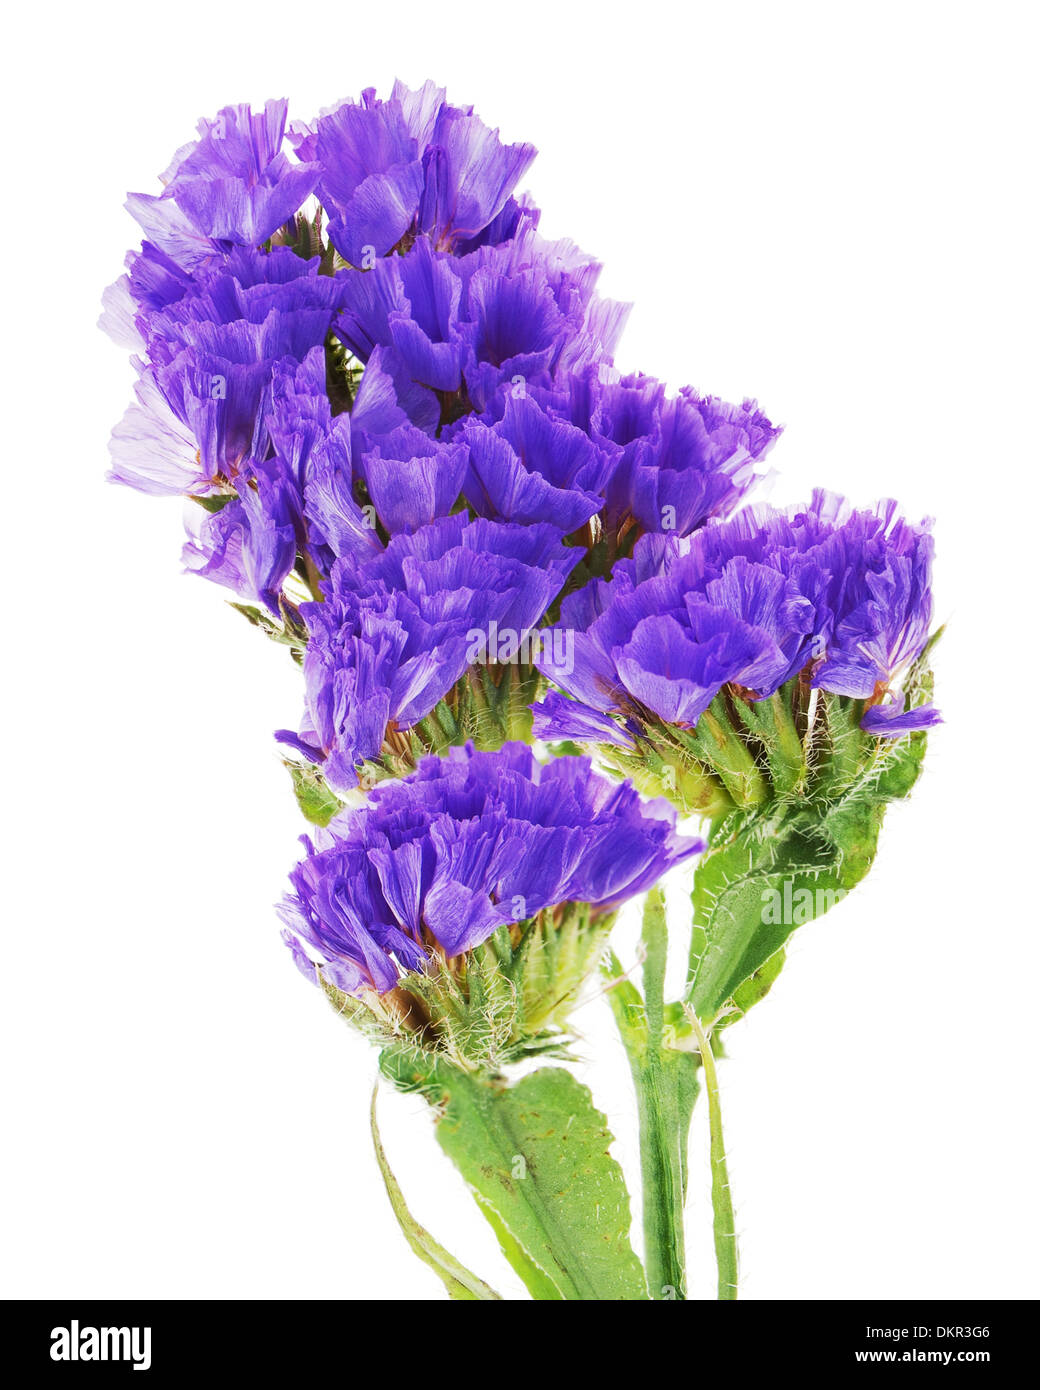 Macro shot of purple statice flowers isolated on white background. Stock Photo